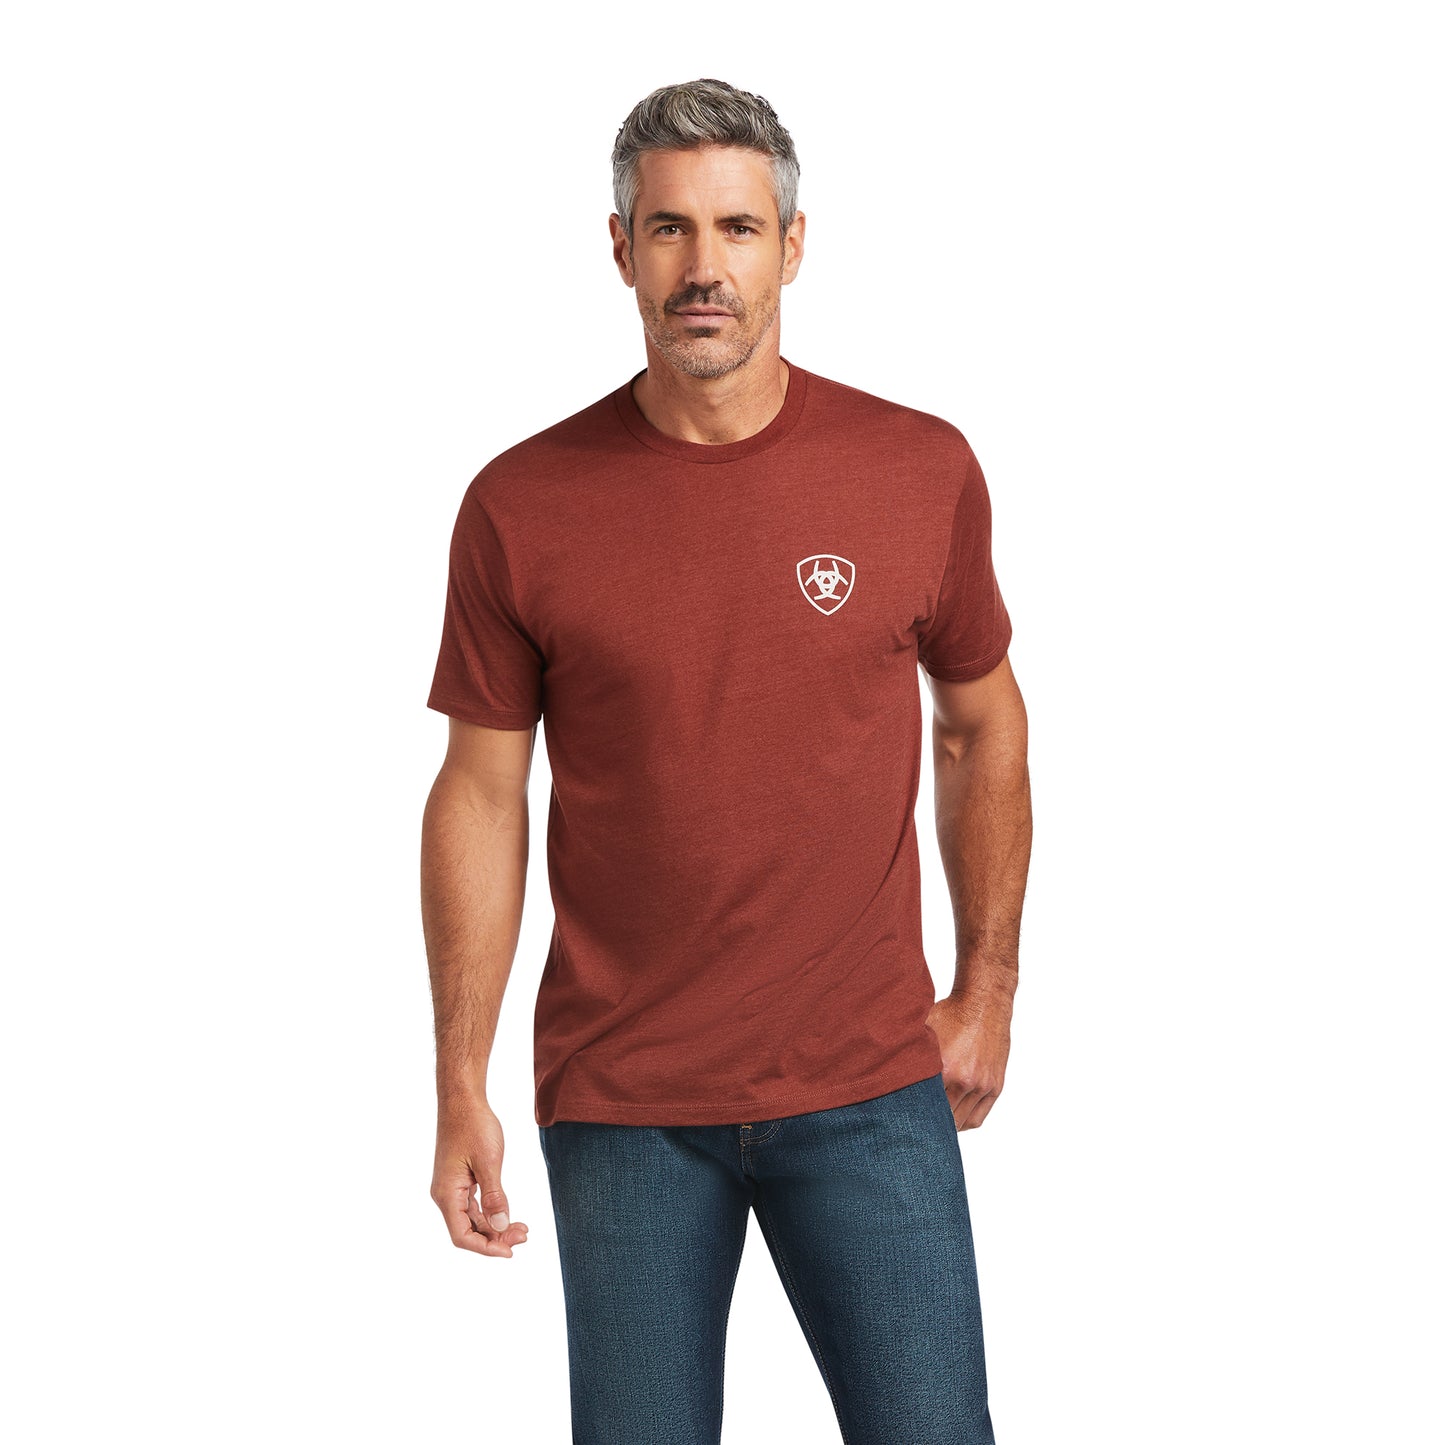 Ariat® Men's Farm Rust Heather Short Sleeve T-Shirt 10039931